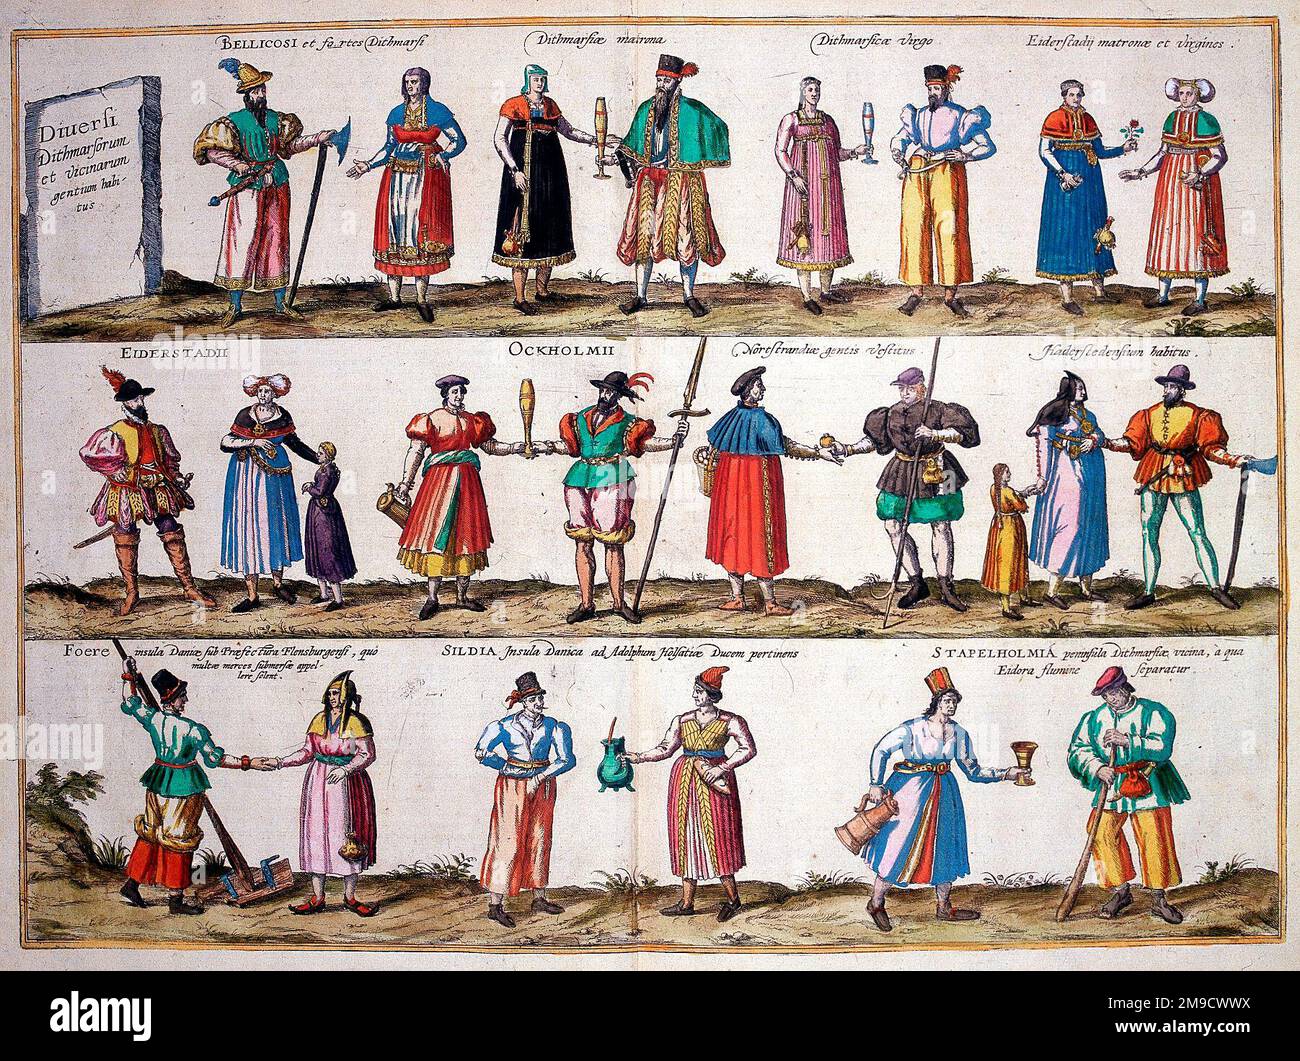 Personnages et costumes de Dithmarschen, Allemagne - Diuersi Dithmarsorum et vicinarum gentium habitus Banque D'Images